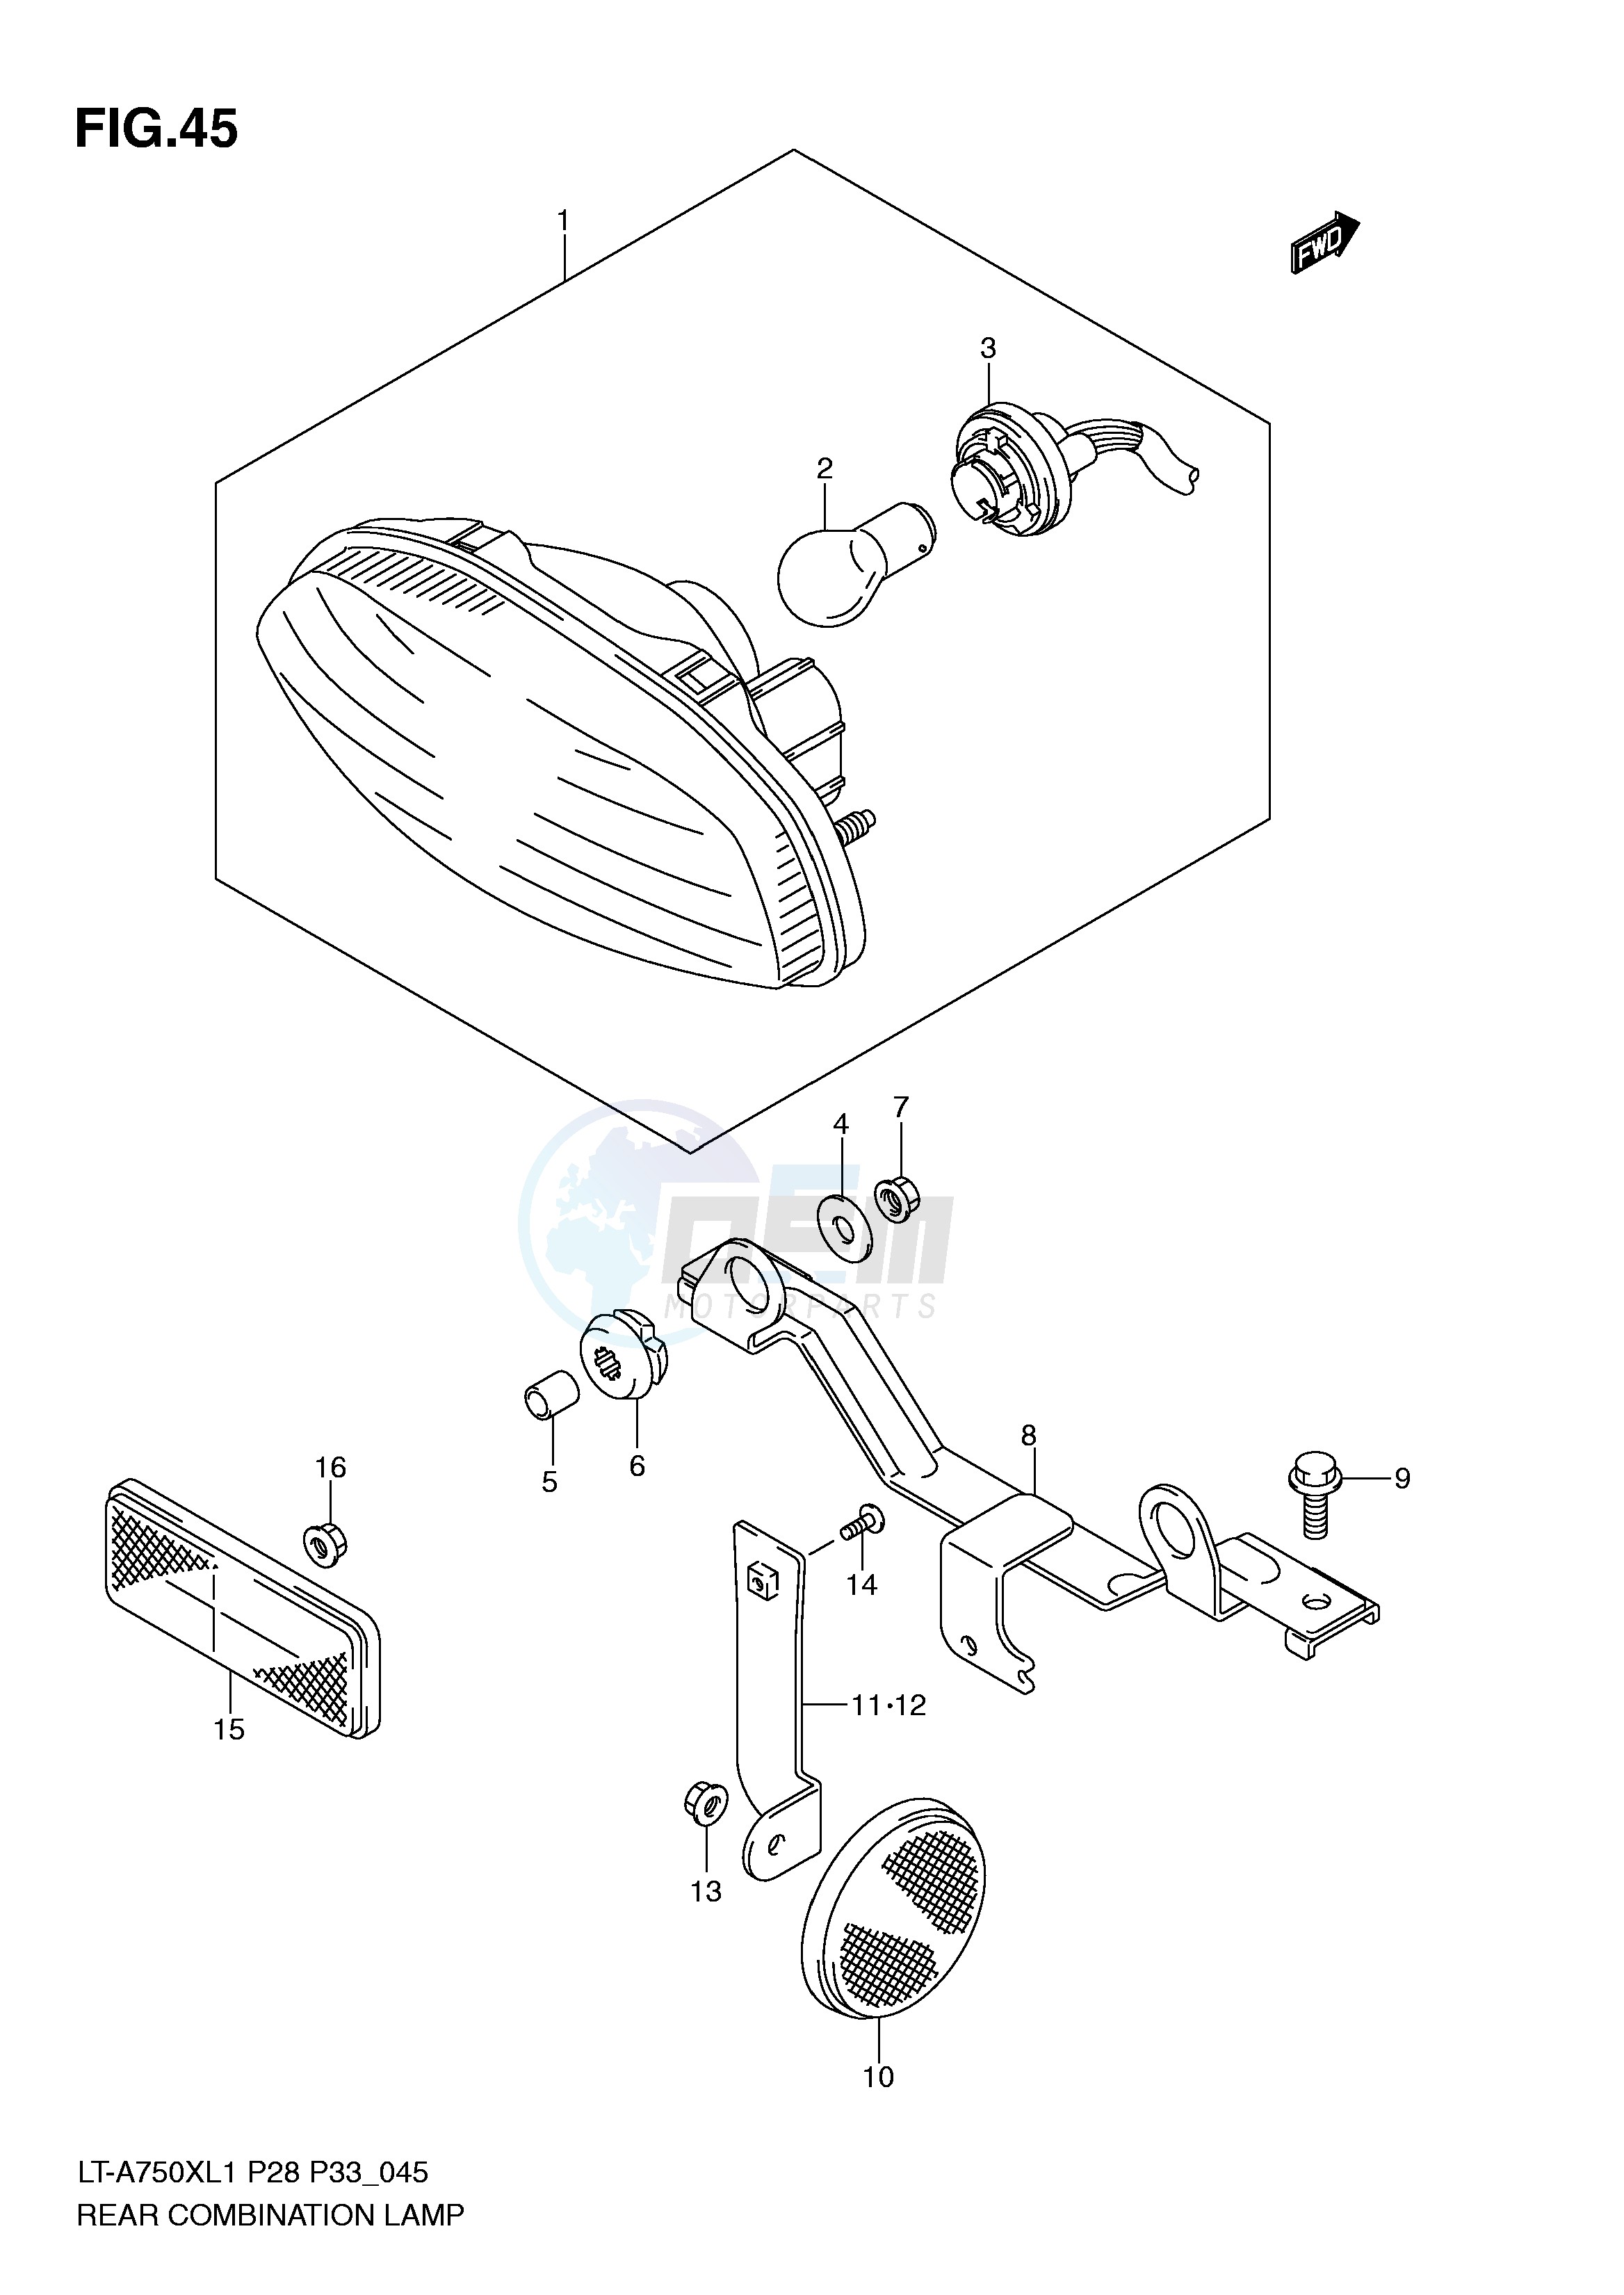 REAR COMBINATION LAMP (LT-A750XZL1 P28) blueprint